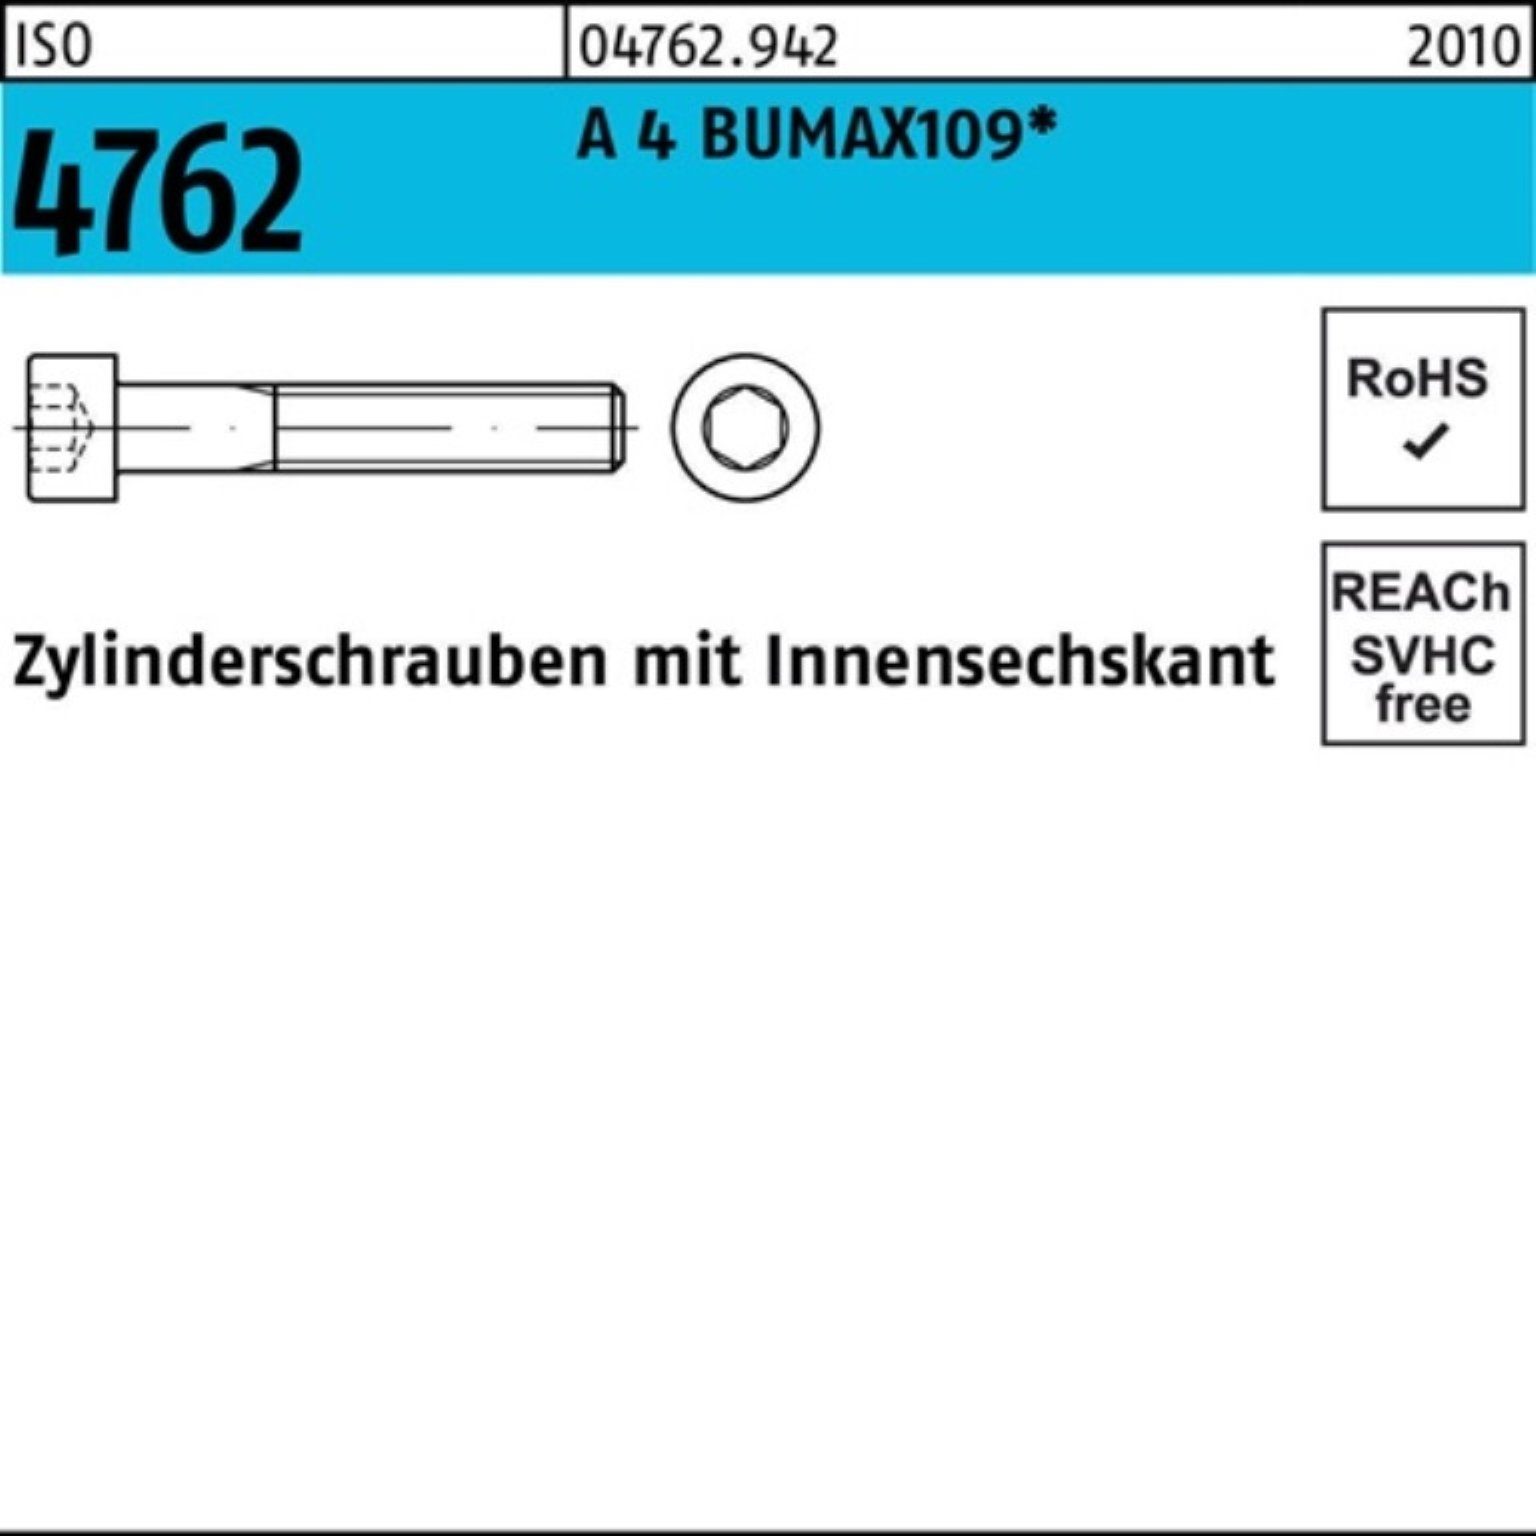 Bufab Zylinderschraube 100er Pack Zylinderschraube Innen-6kt 4 BUMAX109 A ISO 25 70 4762 M12x